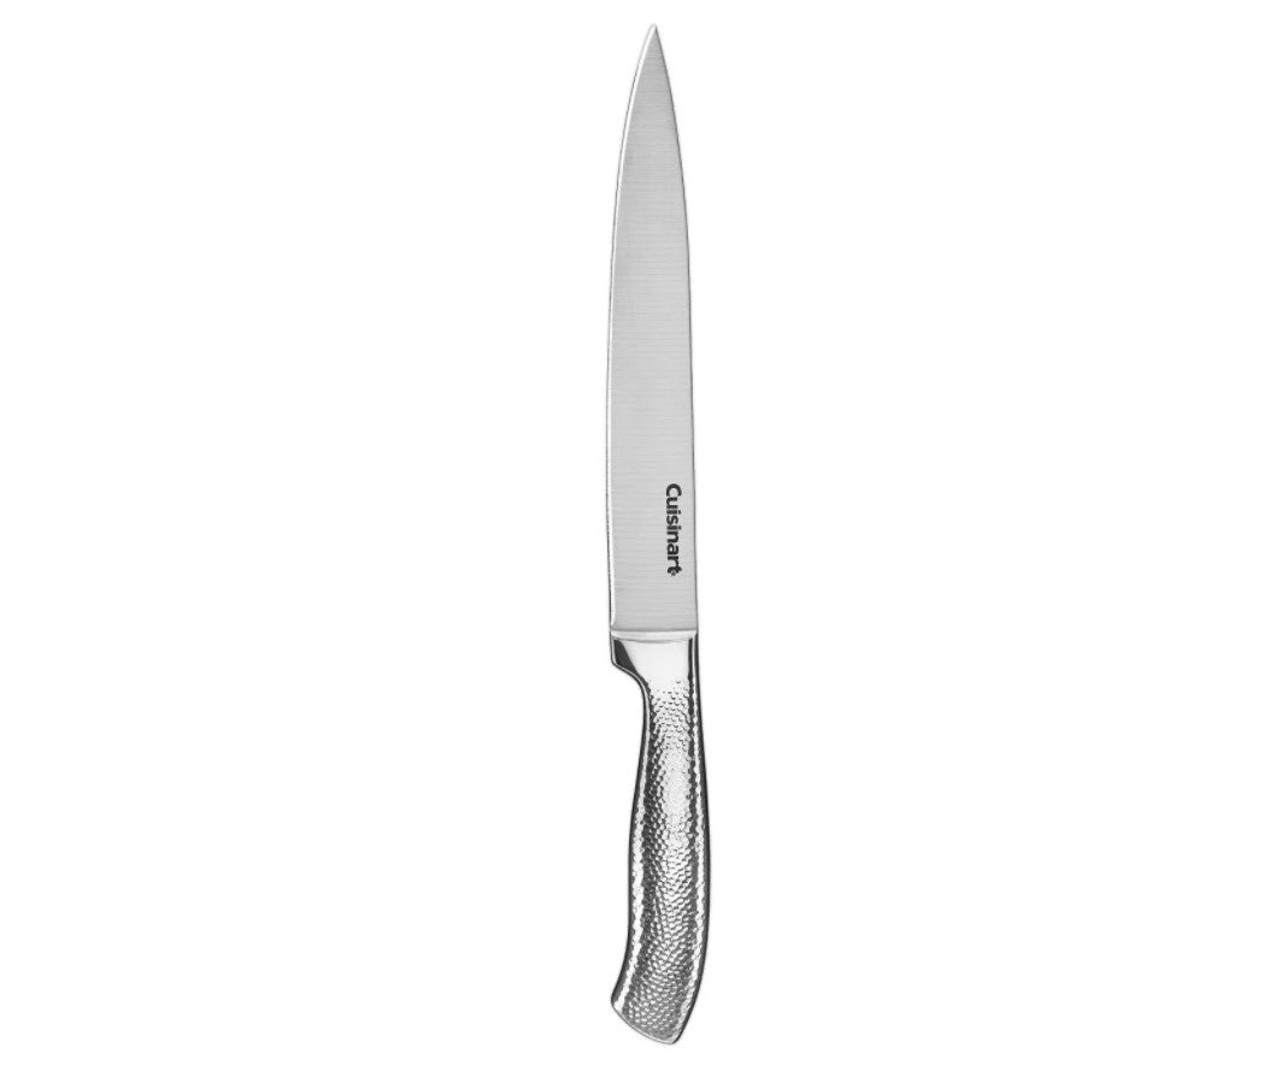 Cuisinart C77SSH-10PT 10-Piece Stainless Steel Hammered Knife Block Set